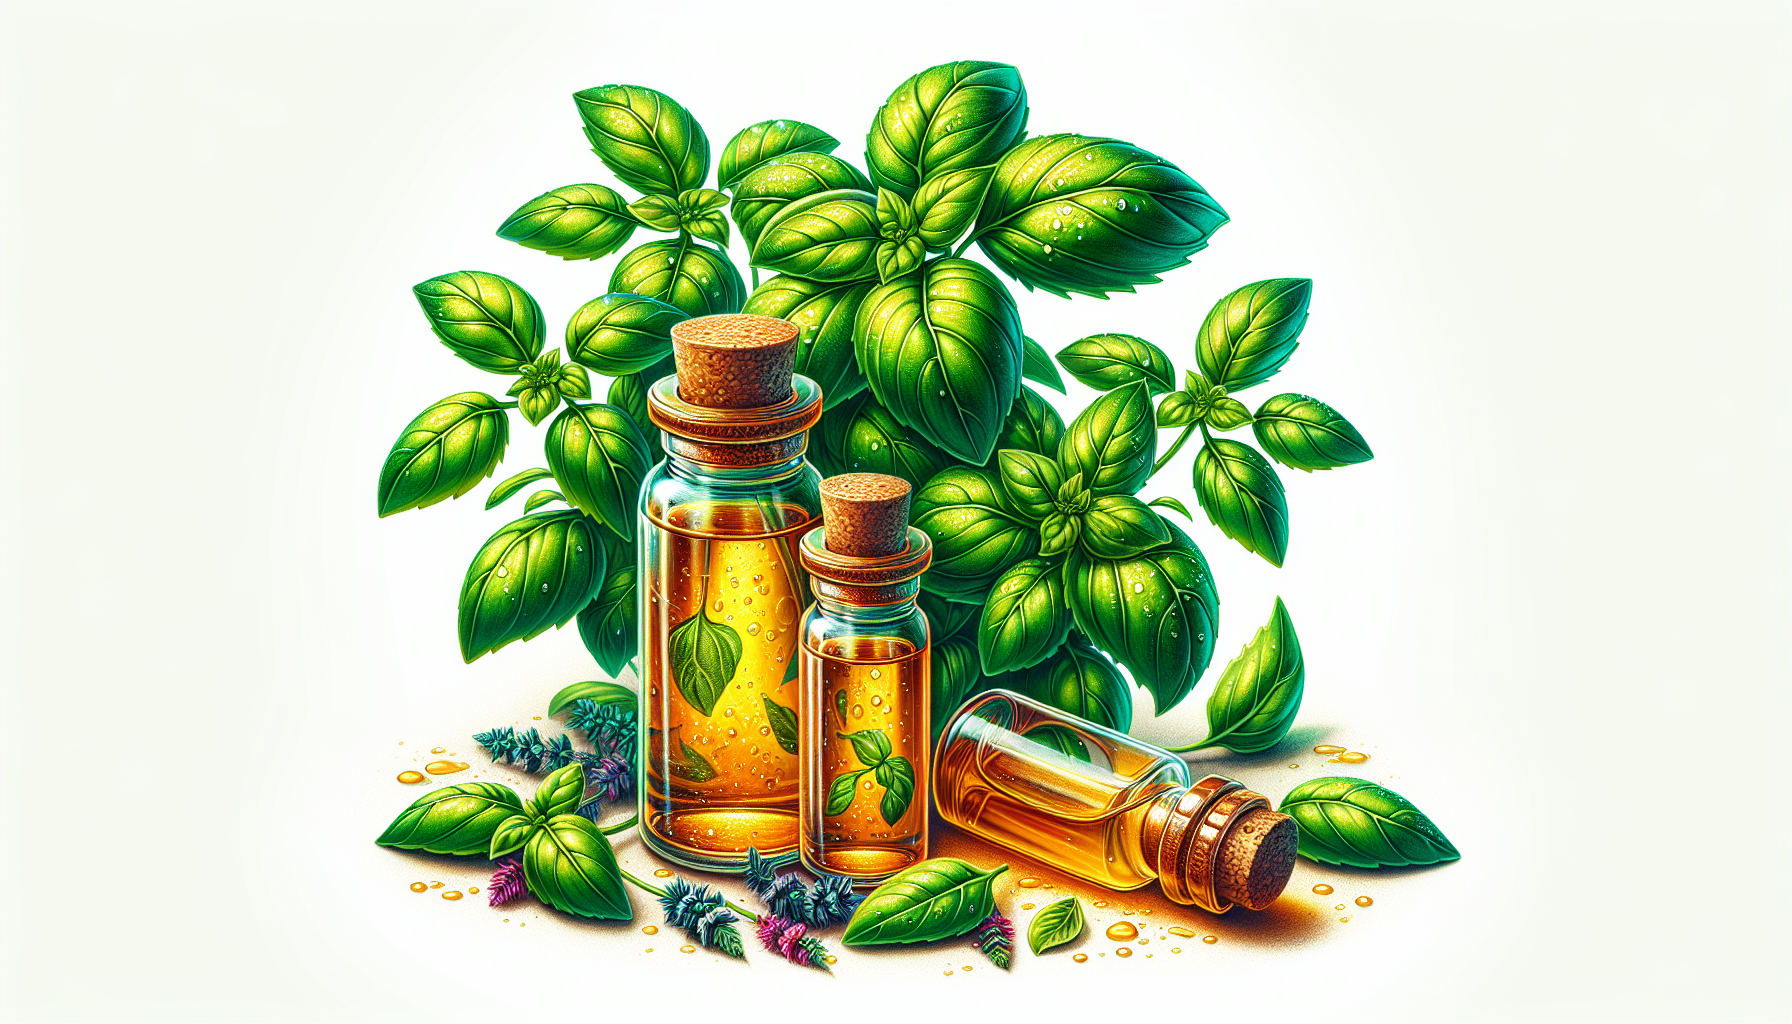 Illustration of fresh basil leaves and essential oils utilizing AI